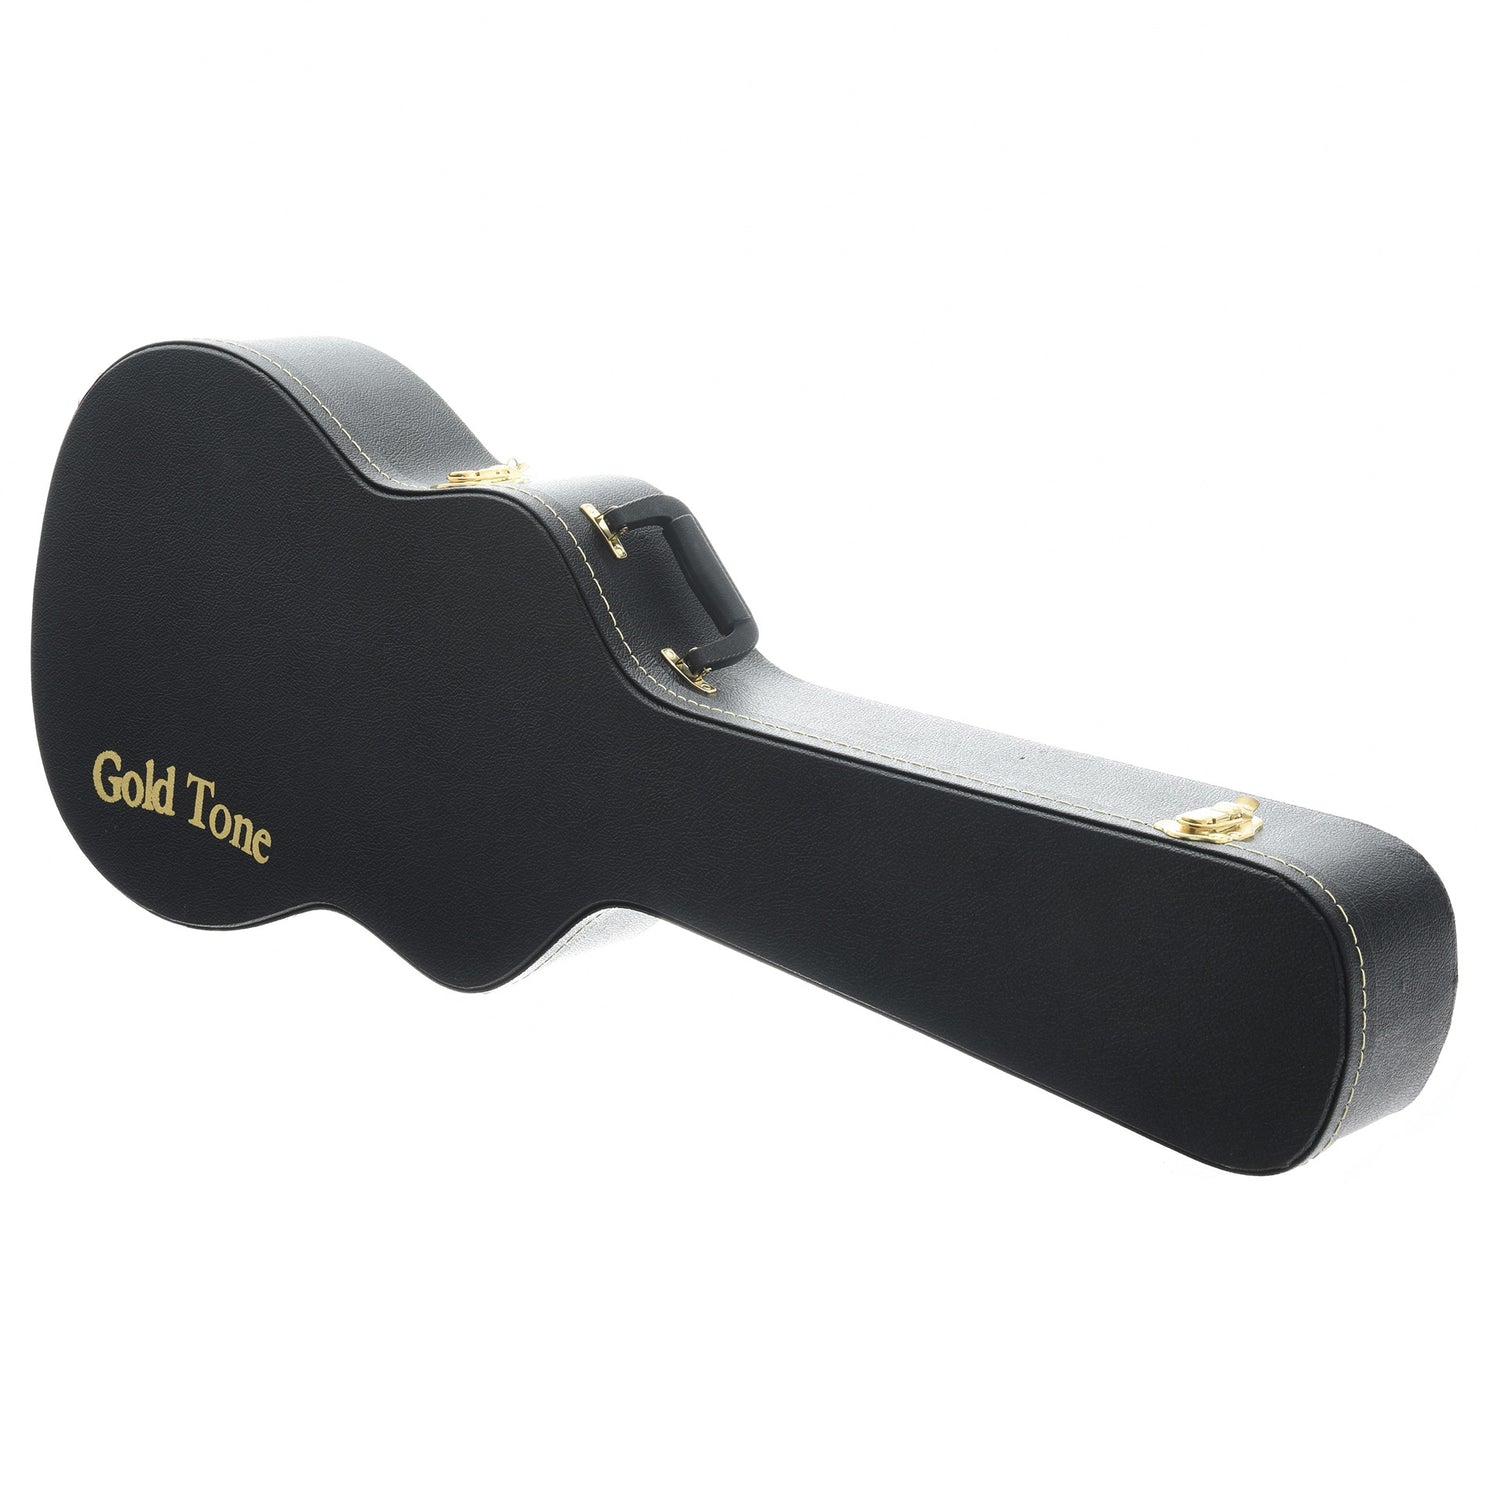 Case for Beard Gold Tone PBS-8 Mahogany 8-String Squareneck Resonator Guitar